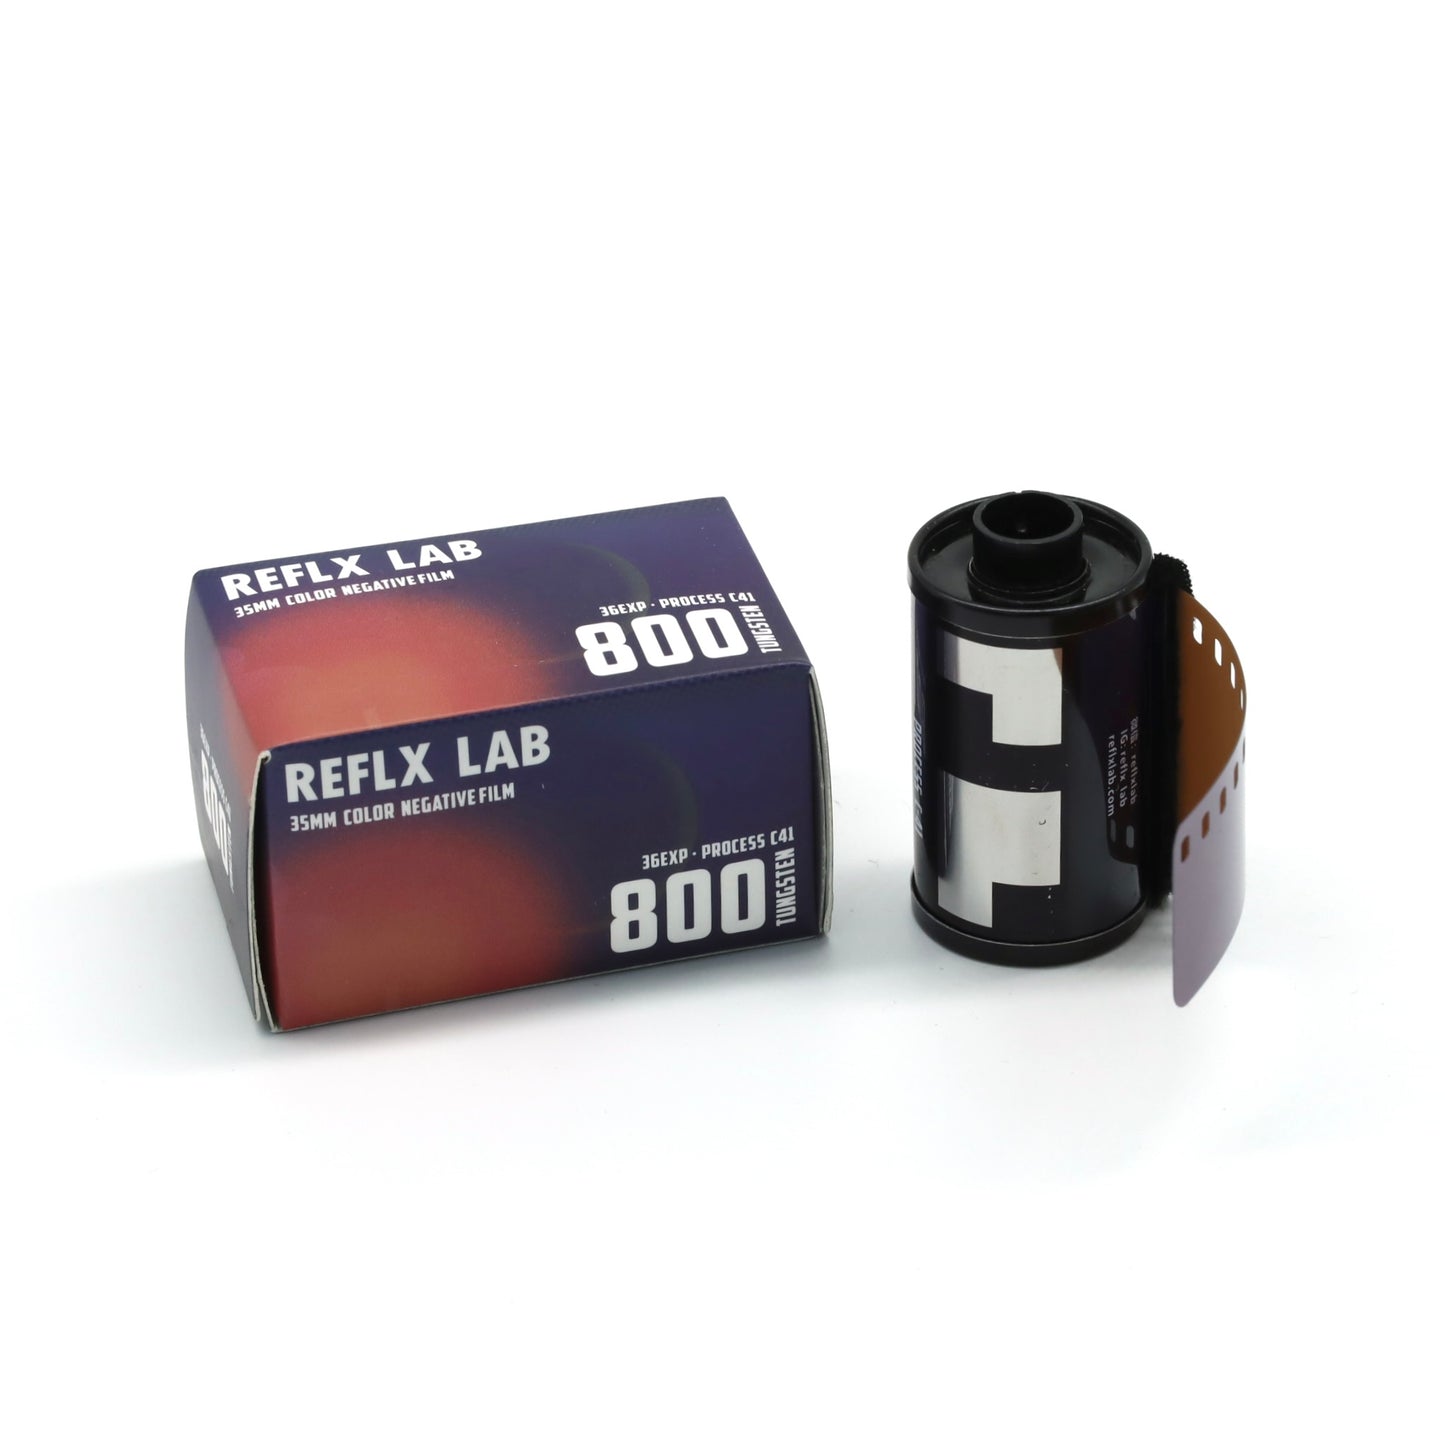 Reflx Lab 800 35mm Color Negative Film 36EXP